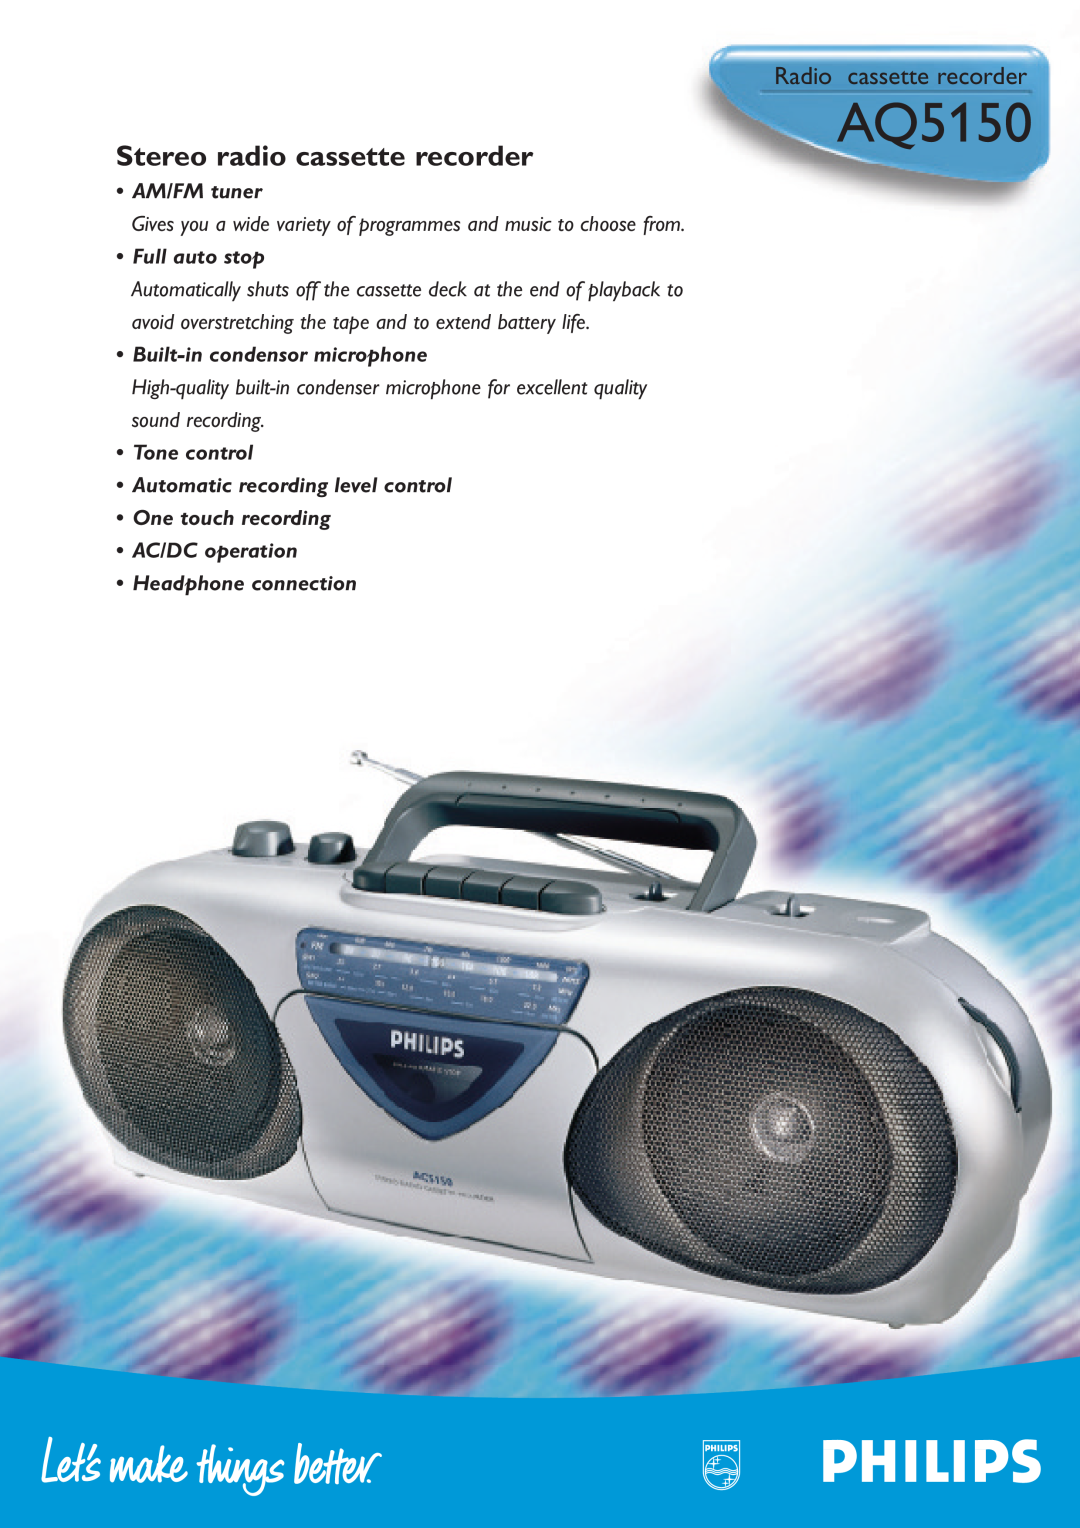 Philips AQ5150 manual Radio cassette recorder, Stereo radio cassette recorder, AM/FM tuner, Full auto stop 